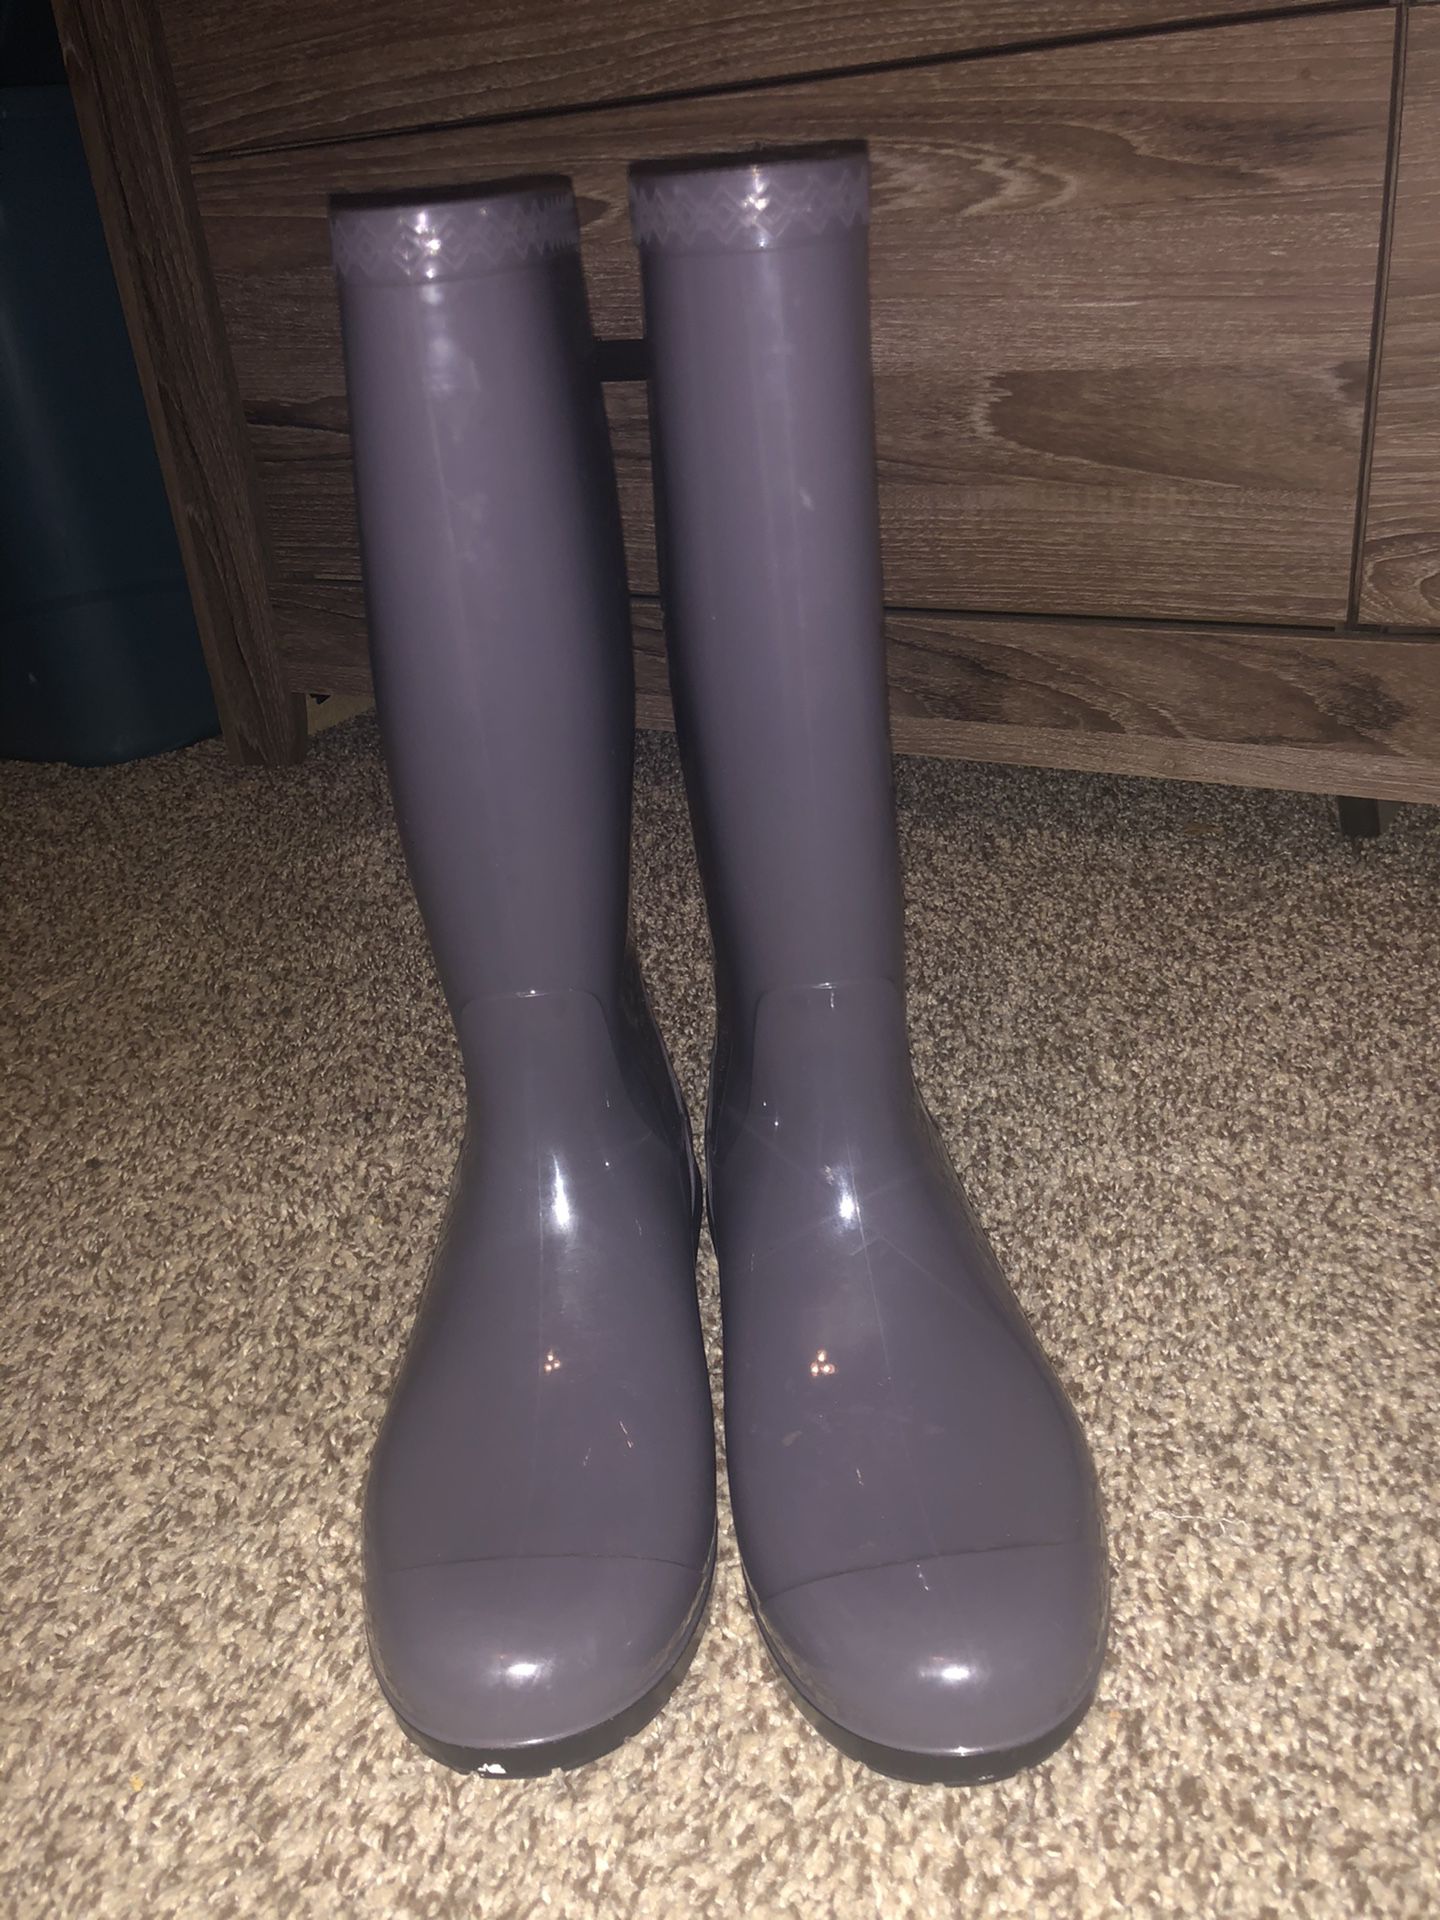 Women’s UGG rain boots, size 8 (gray)